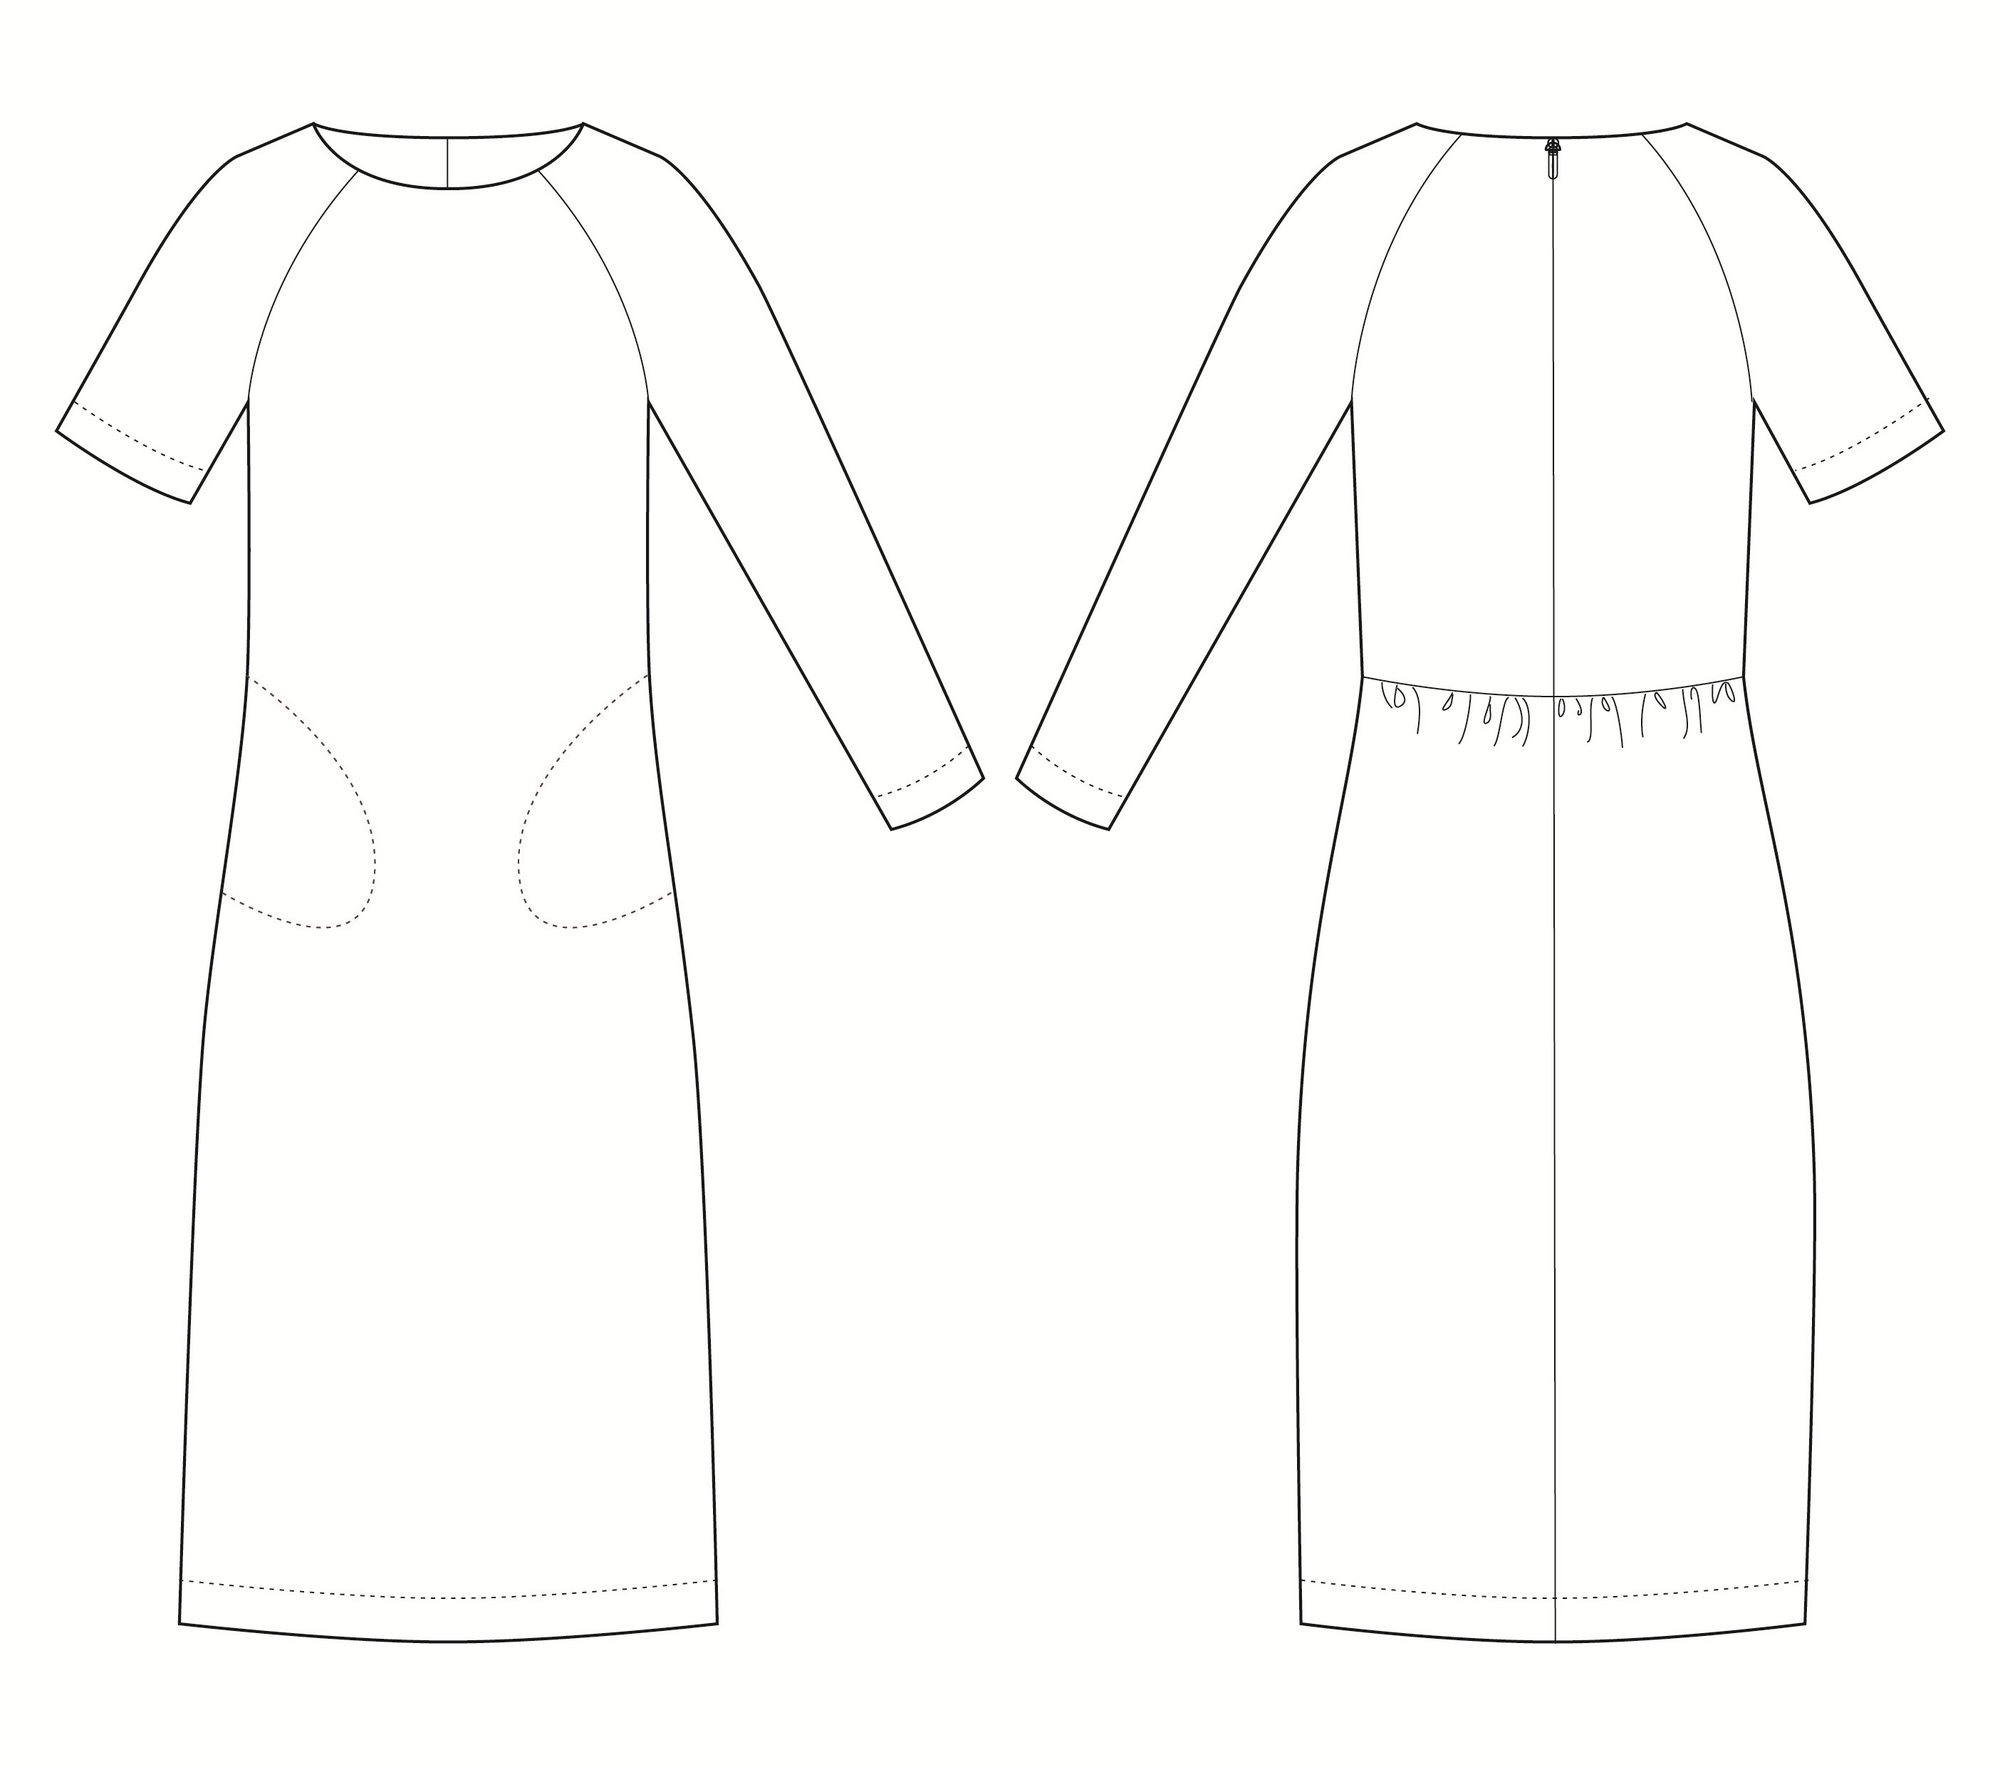 Avid Seamstress Patterns, The Gathered Dress. - BeyondThePinkDoor